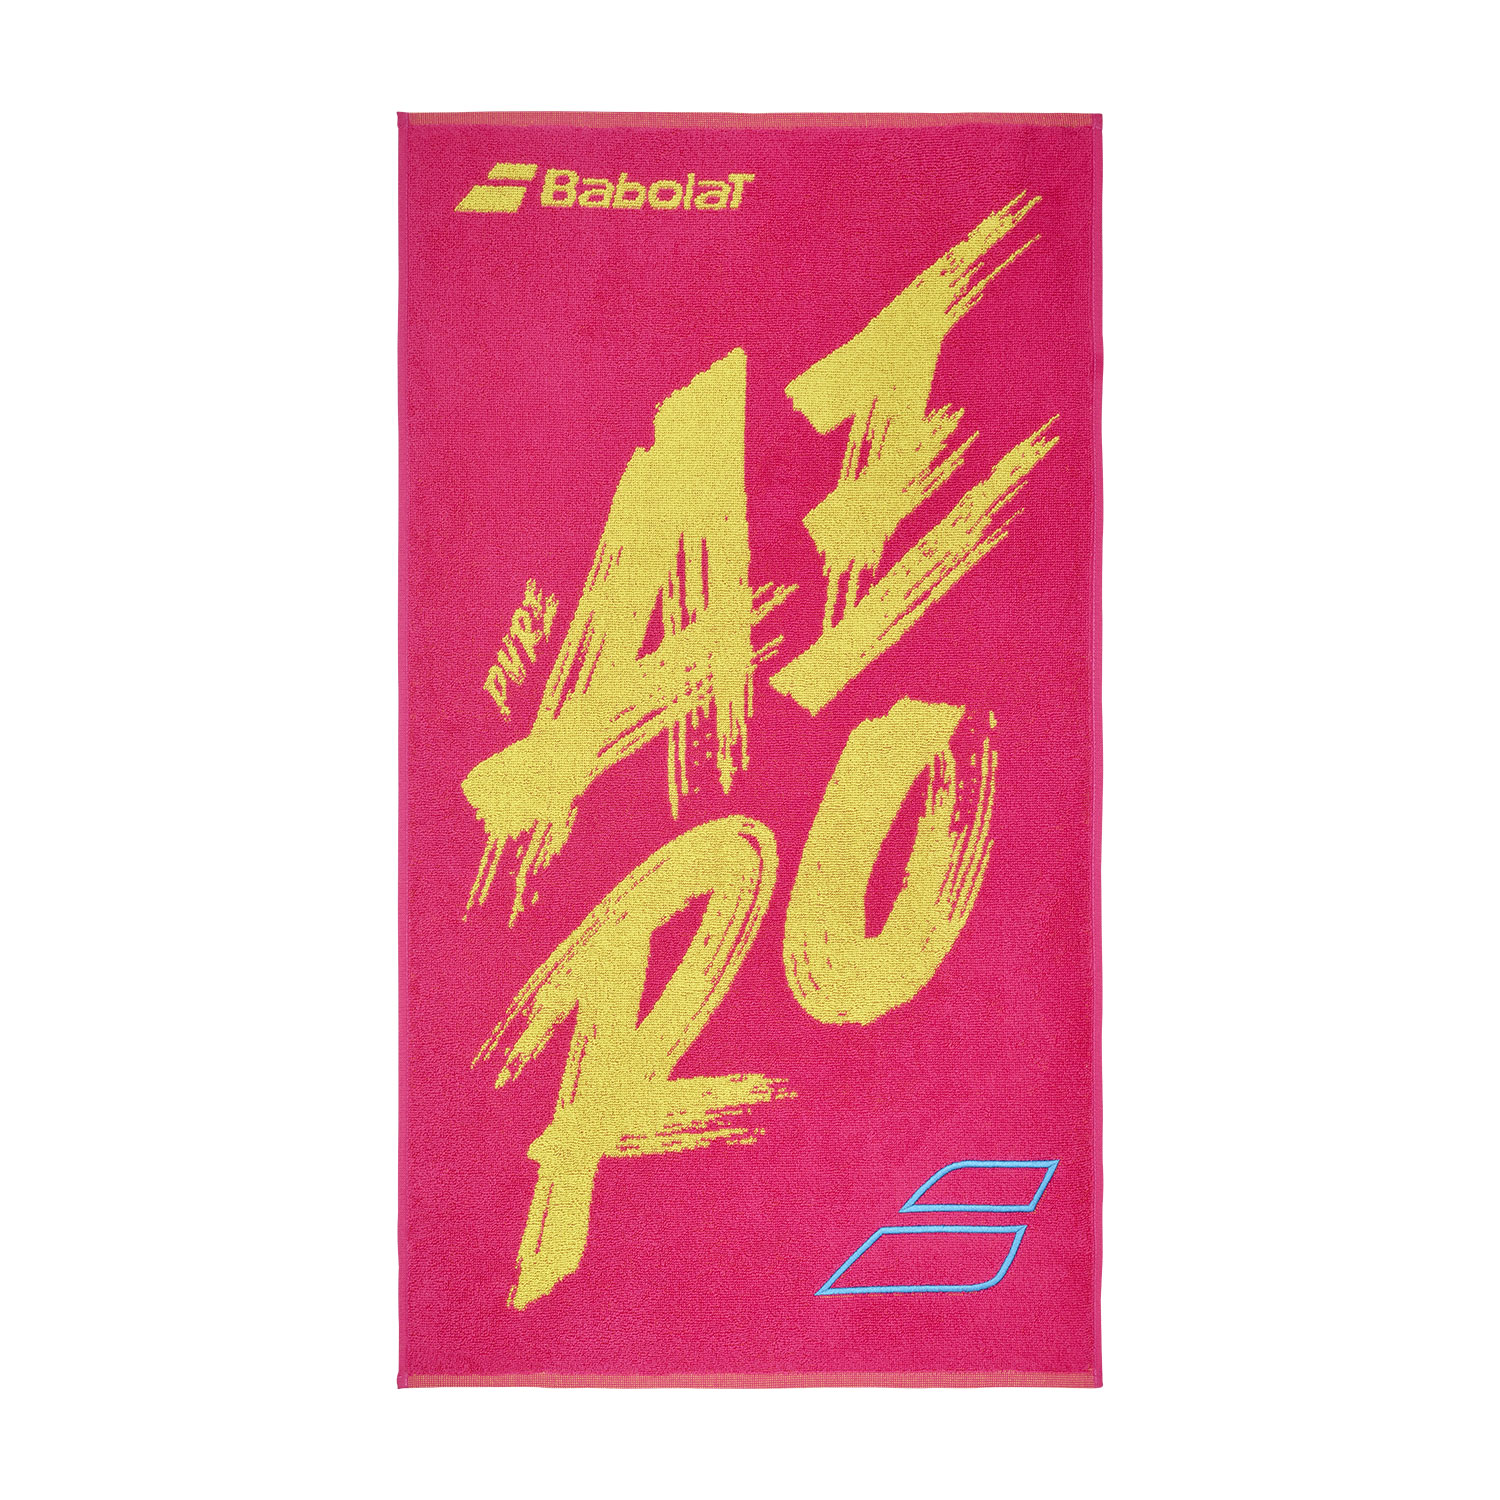 Babolat Graphic Towel - Pink/Aero